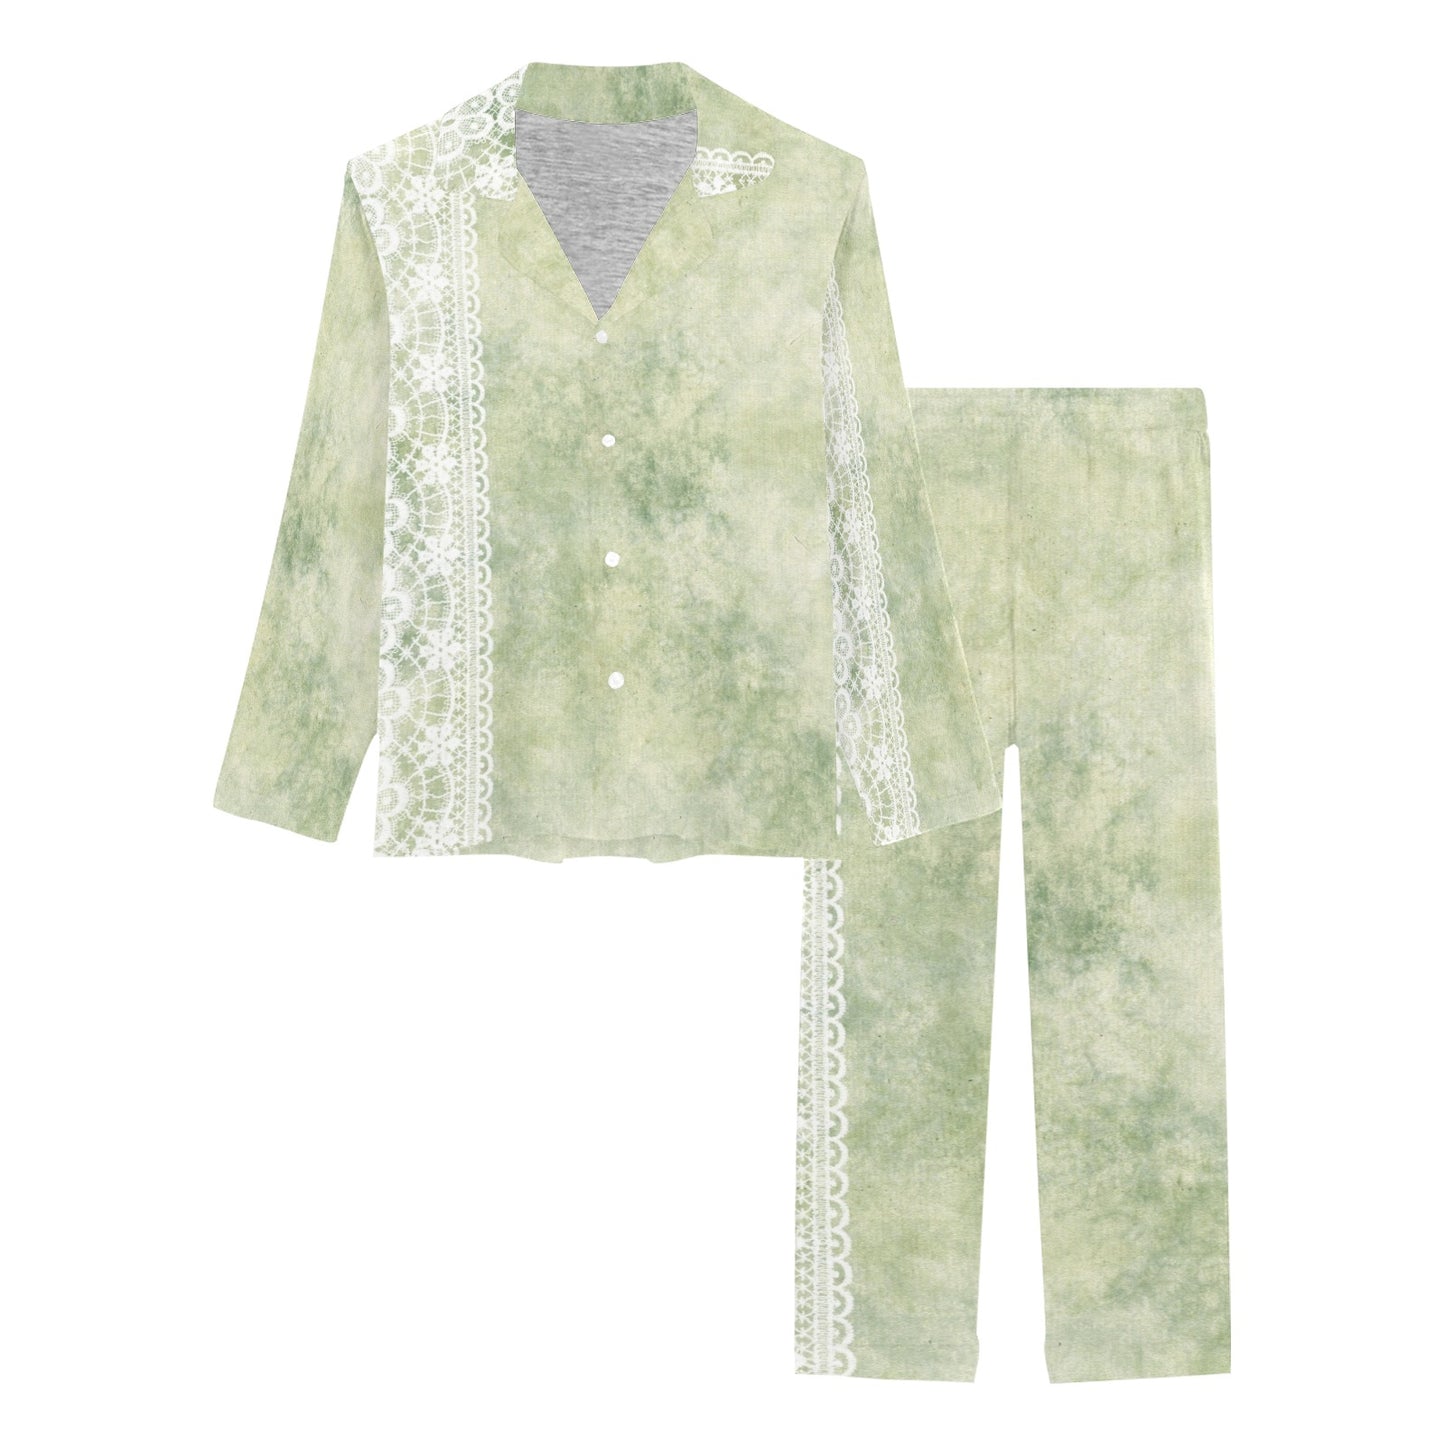 Victorian printed lace pajama set, design 42 Women's Long Pajama Set (Sets 02)